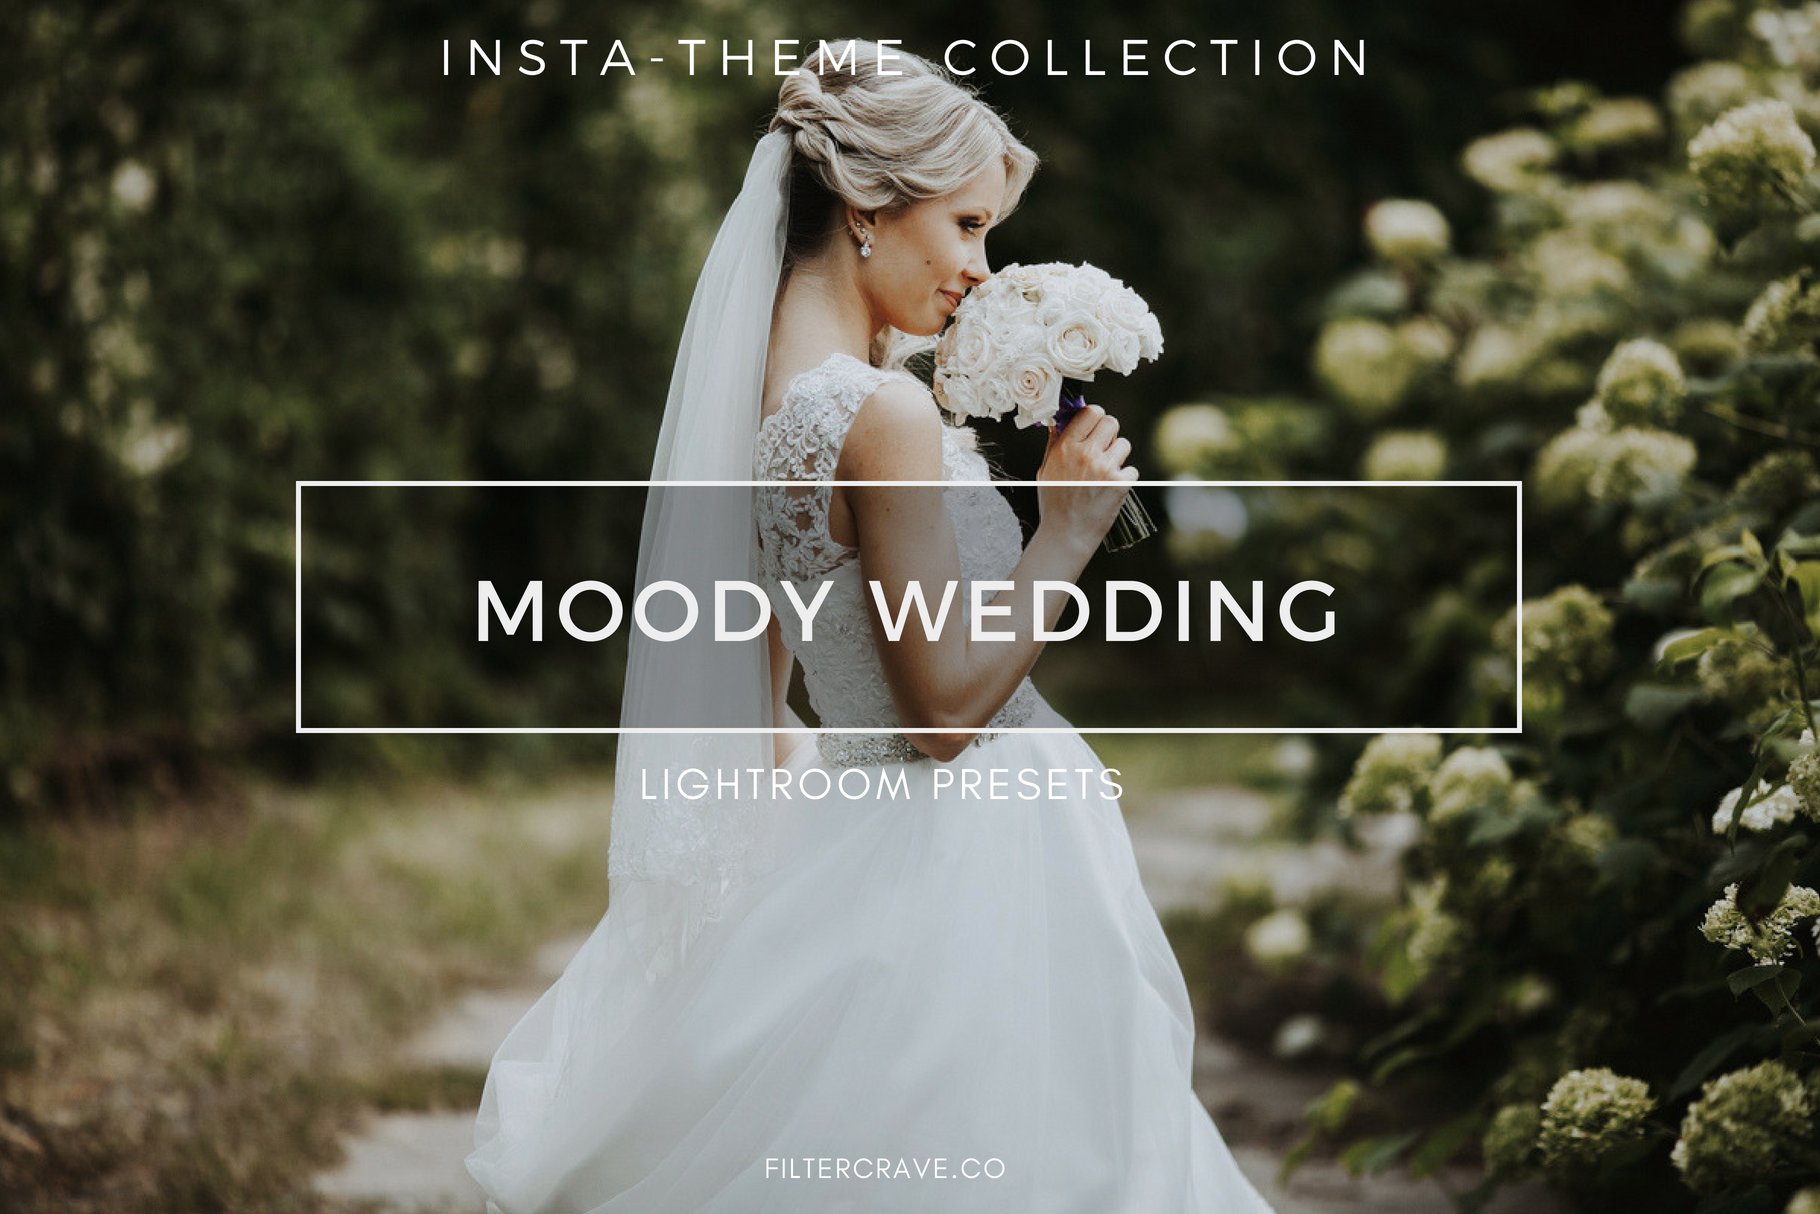 Moody Wedding Lightroom Presetscover image.